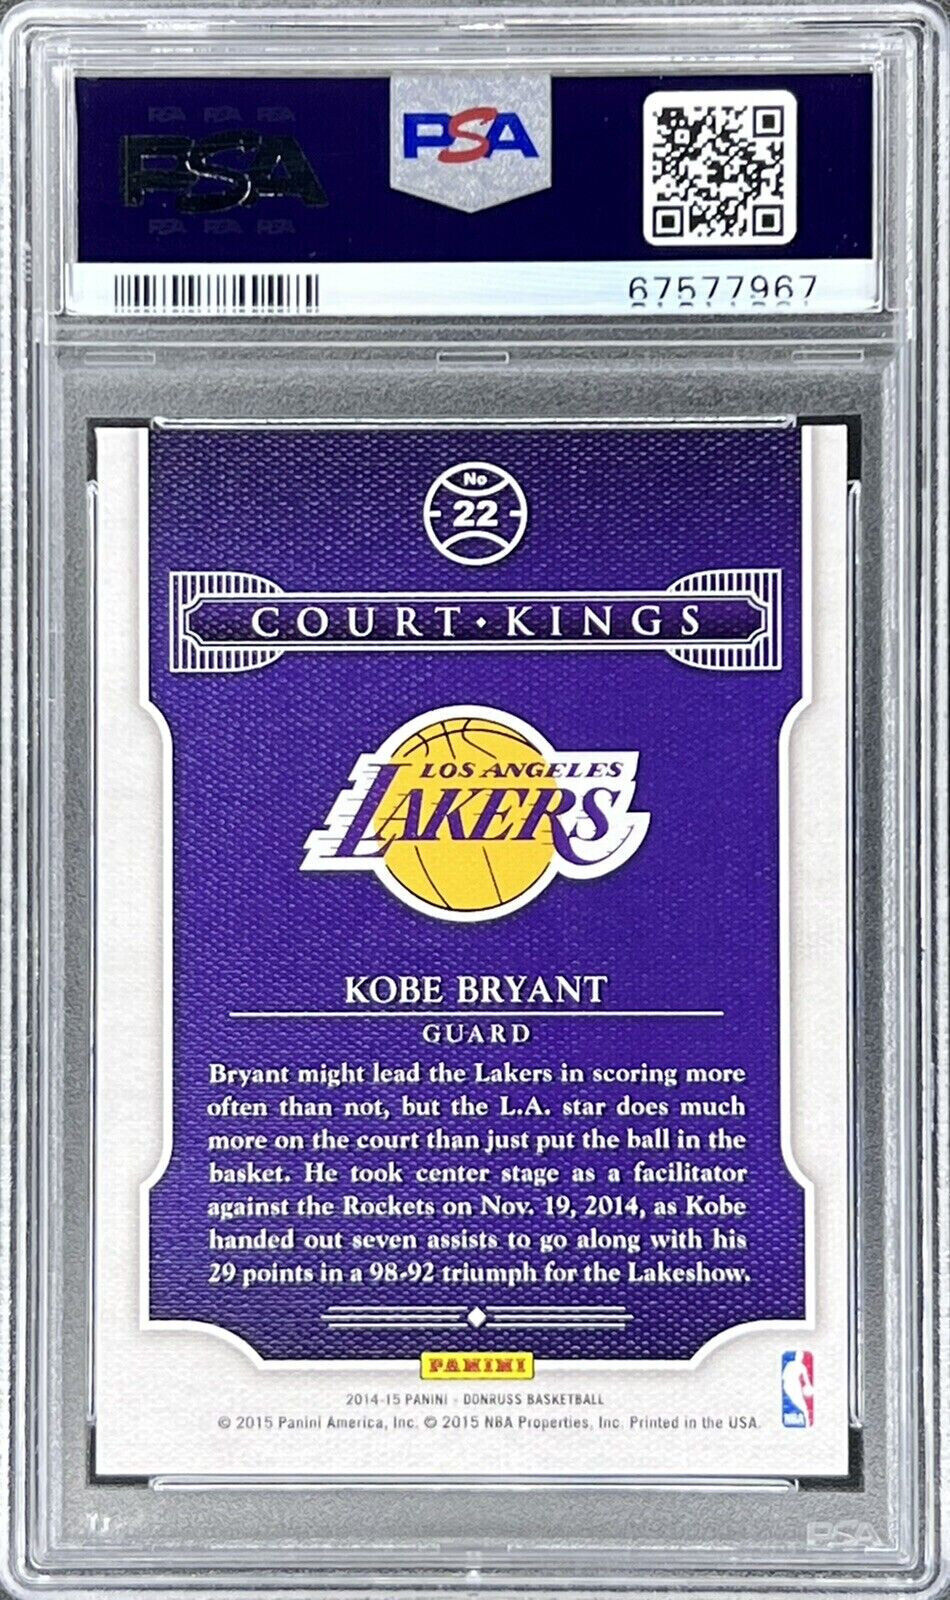 Gem Mint 10 Kobe Bryant 22 Lakers Court Kings 2014 15 Donruss Insert Cards Psa 1